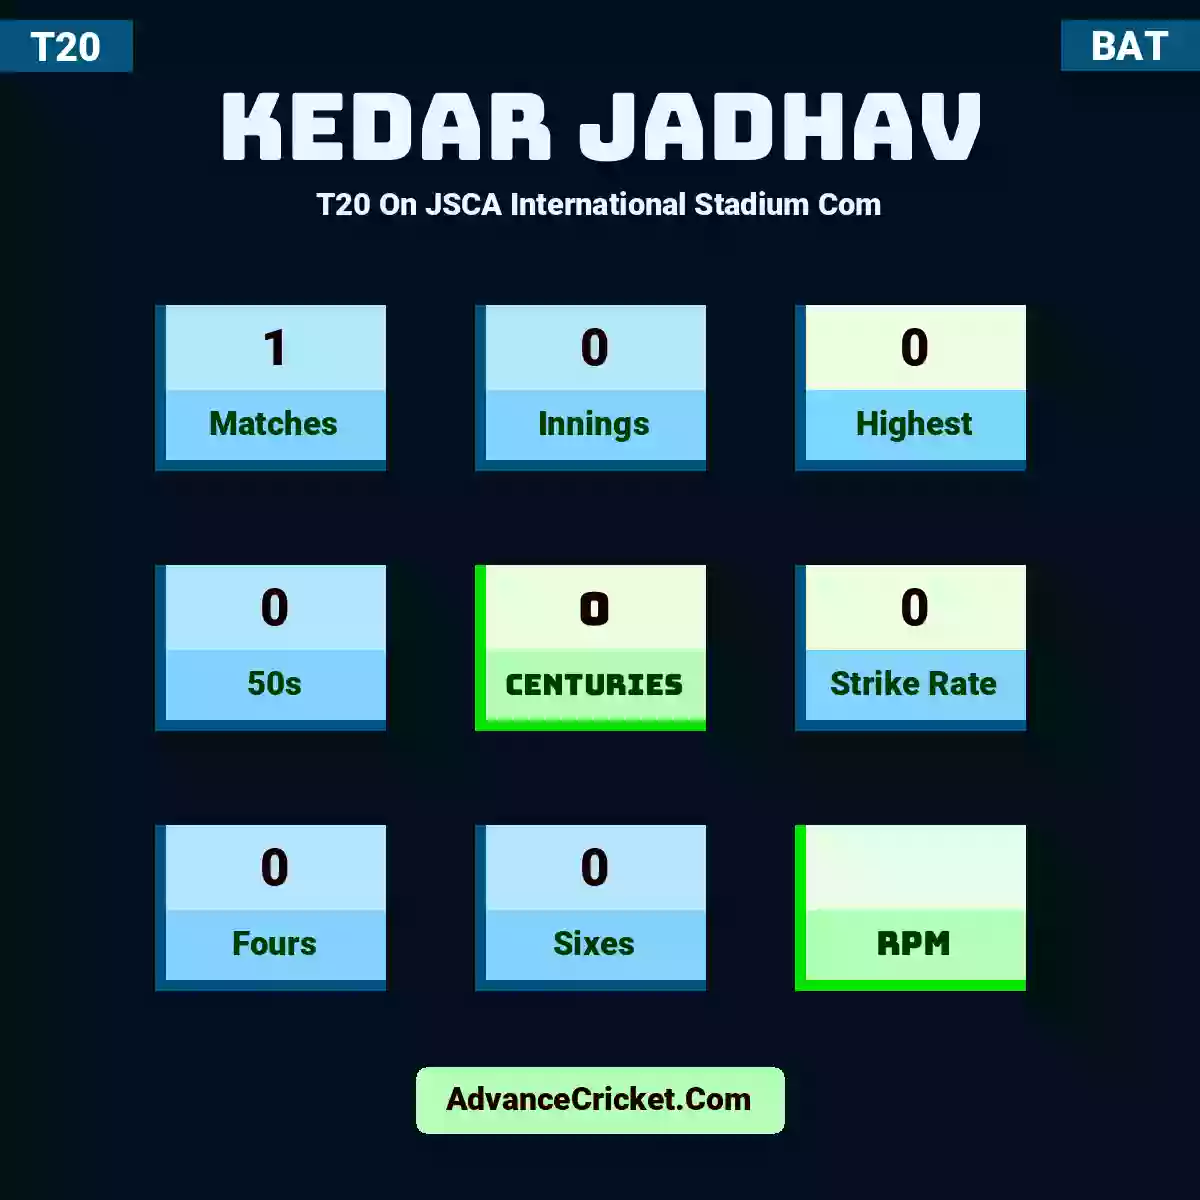 Kedar Jadhav T20  On JSCA International Stadium Com, Kedar Jadhav played 1 matches, scored 0 runs as highest, 0 half-centuries, and 0 centuries, with a strike rate of 0. K.Jadhav hit 0 fours and 0 sixes.